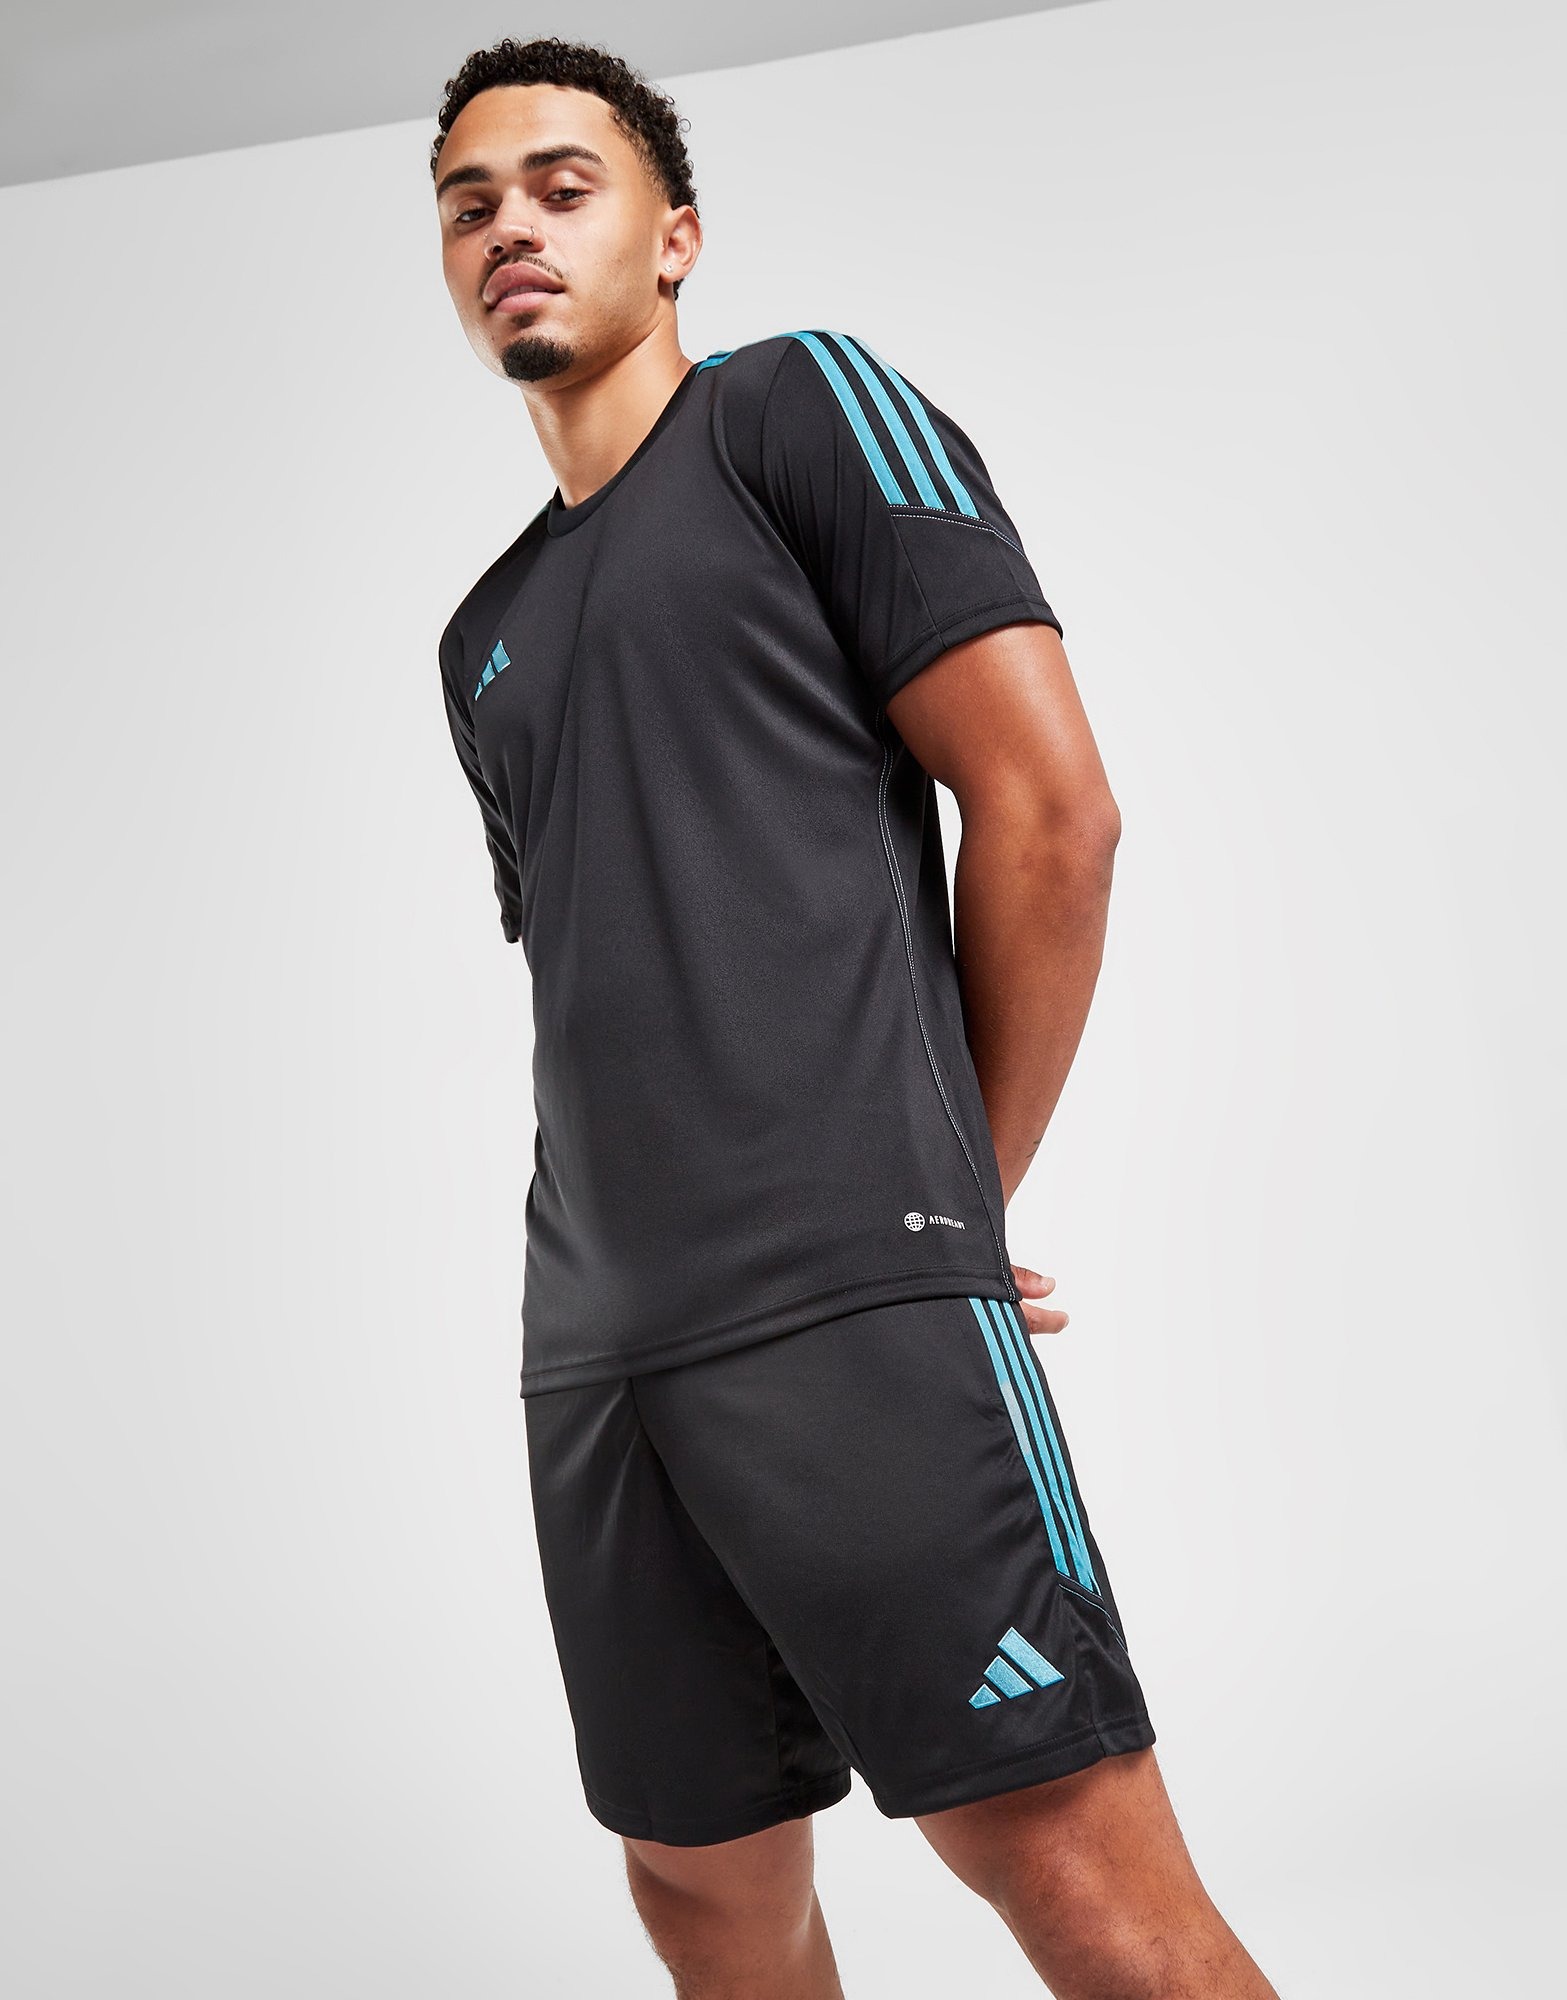 Adidas Mens Estro 19 T Shirt Football Top Jersey Gym Sports TShirt Size 